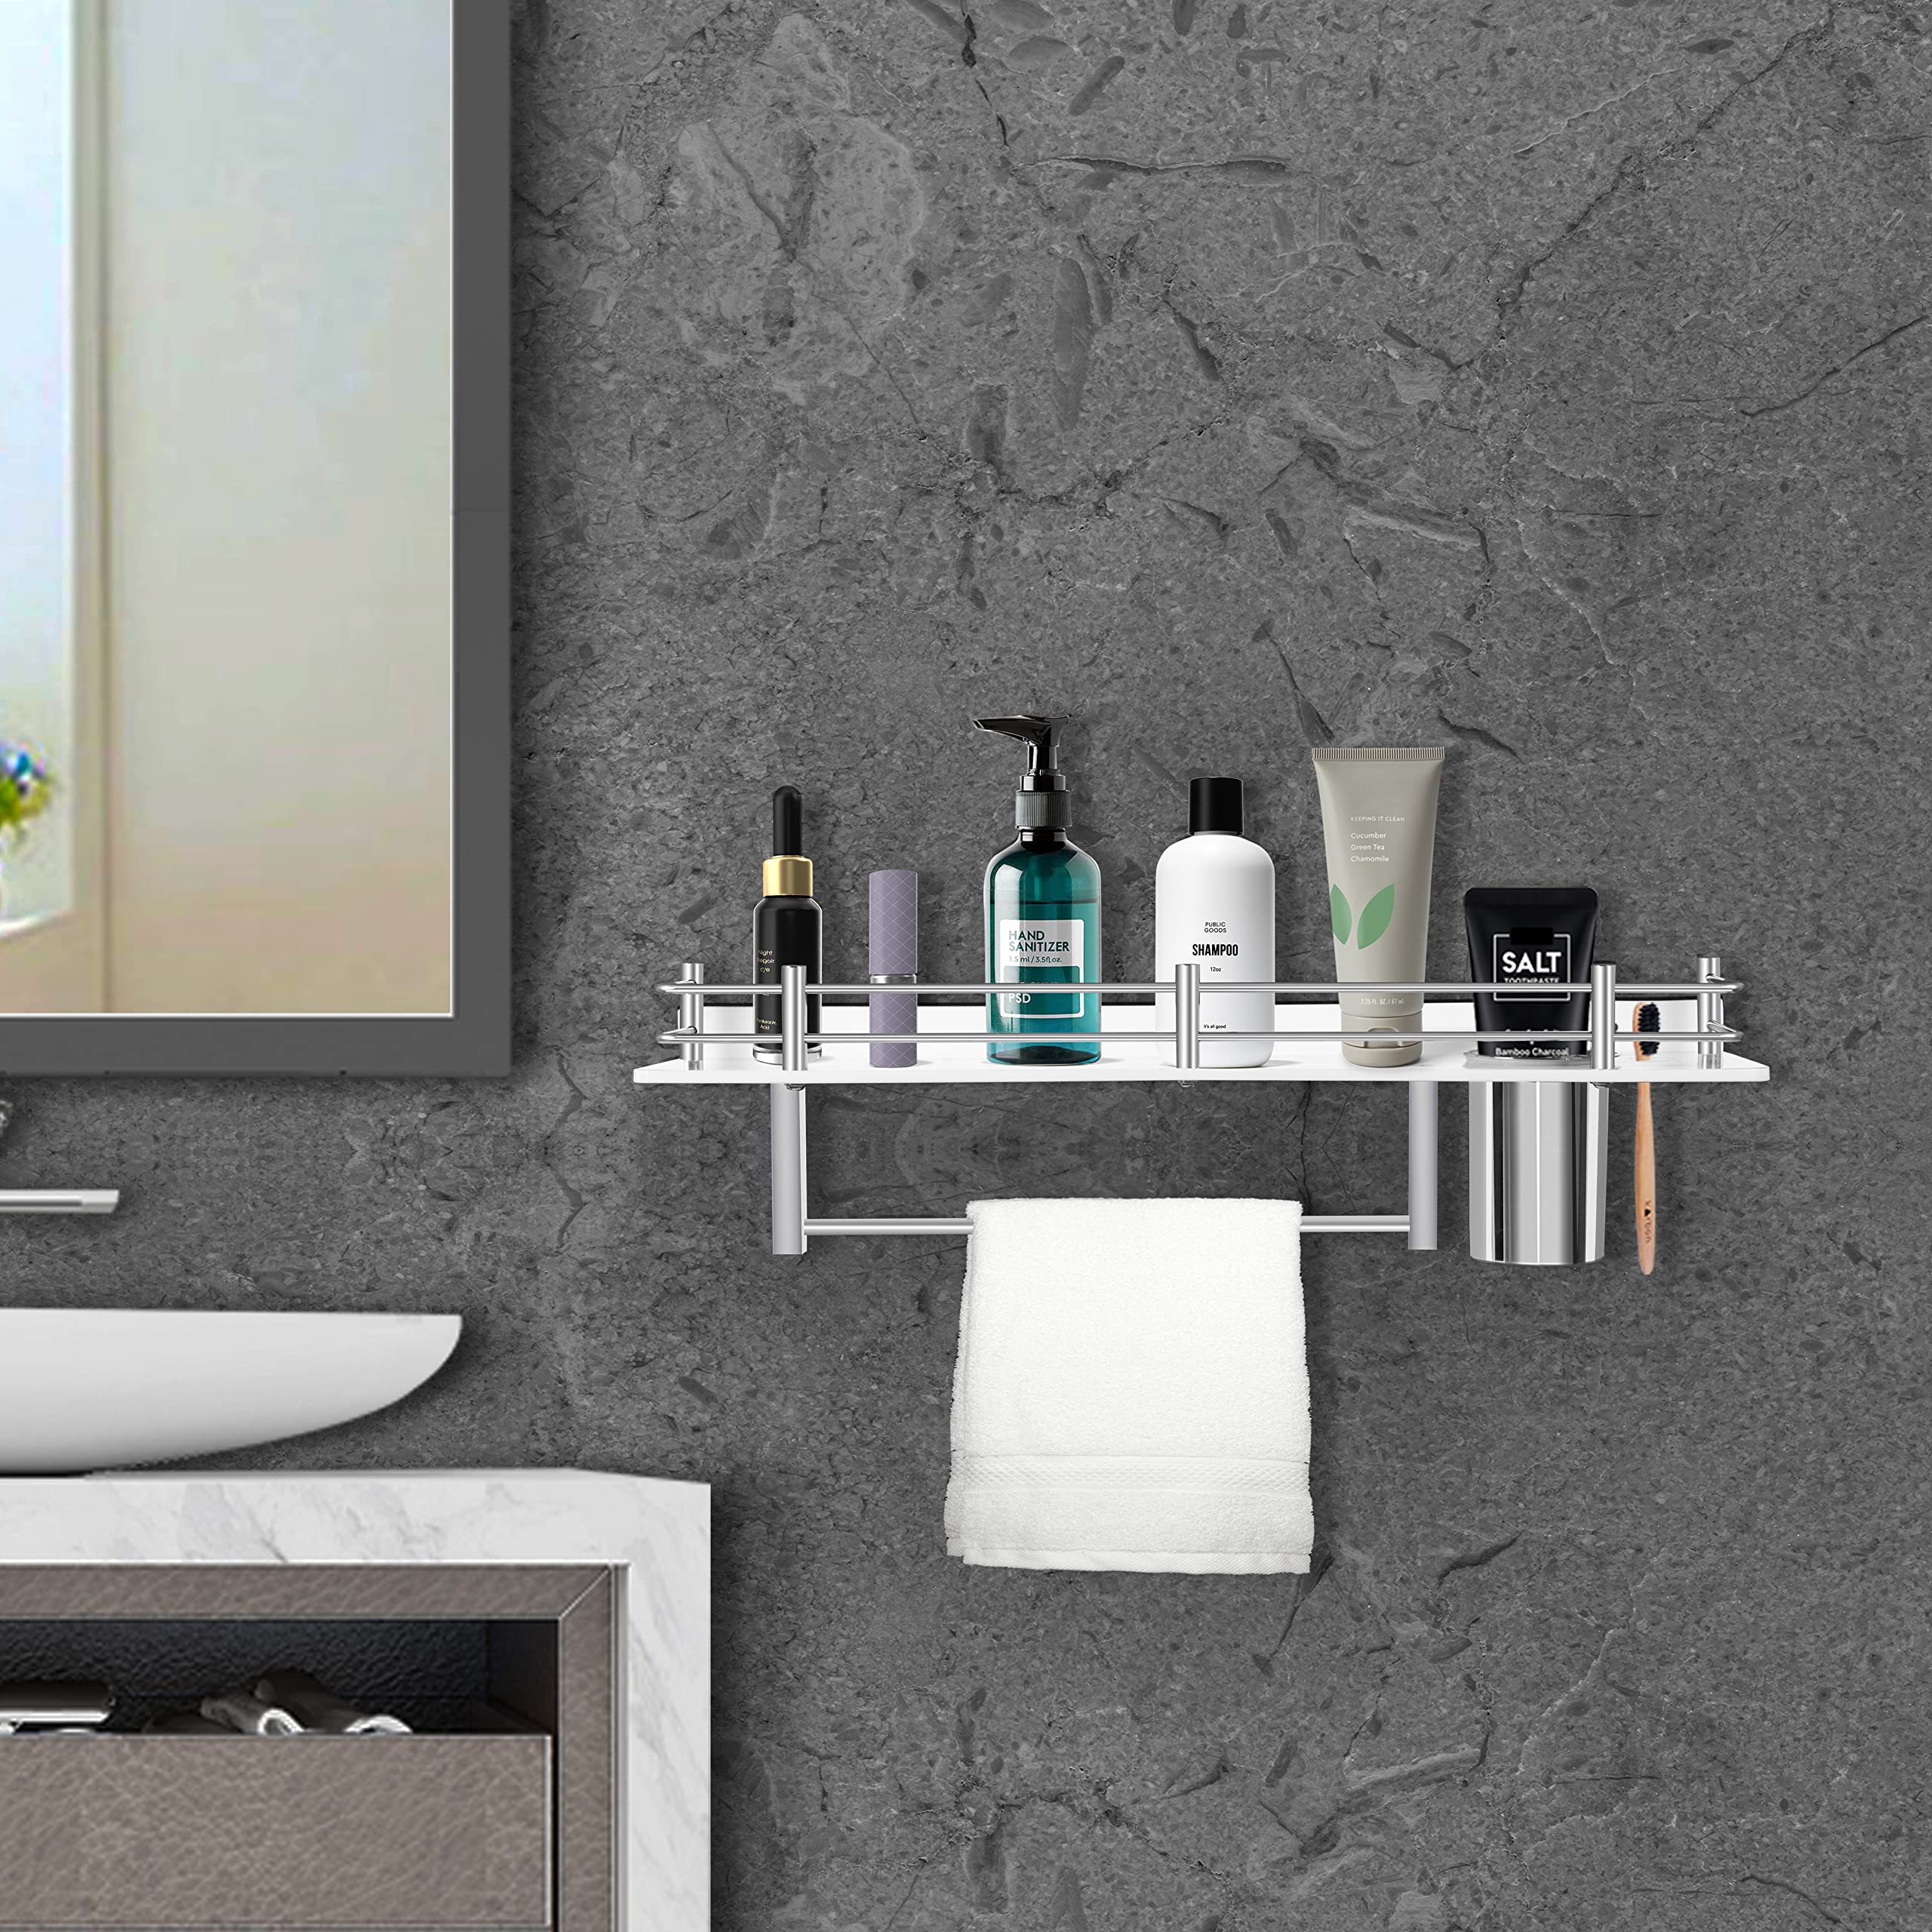 Plantex Acrylic 3 in 1 Multipurpose Bathroom Shelf/Rack/Towel Hanger/Tumbler Holder/Bathroom Accessories-White(18 x 5 Inches)